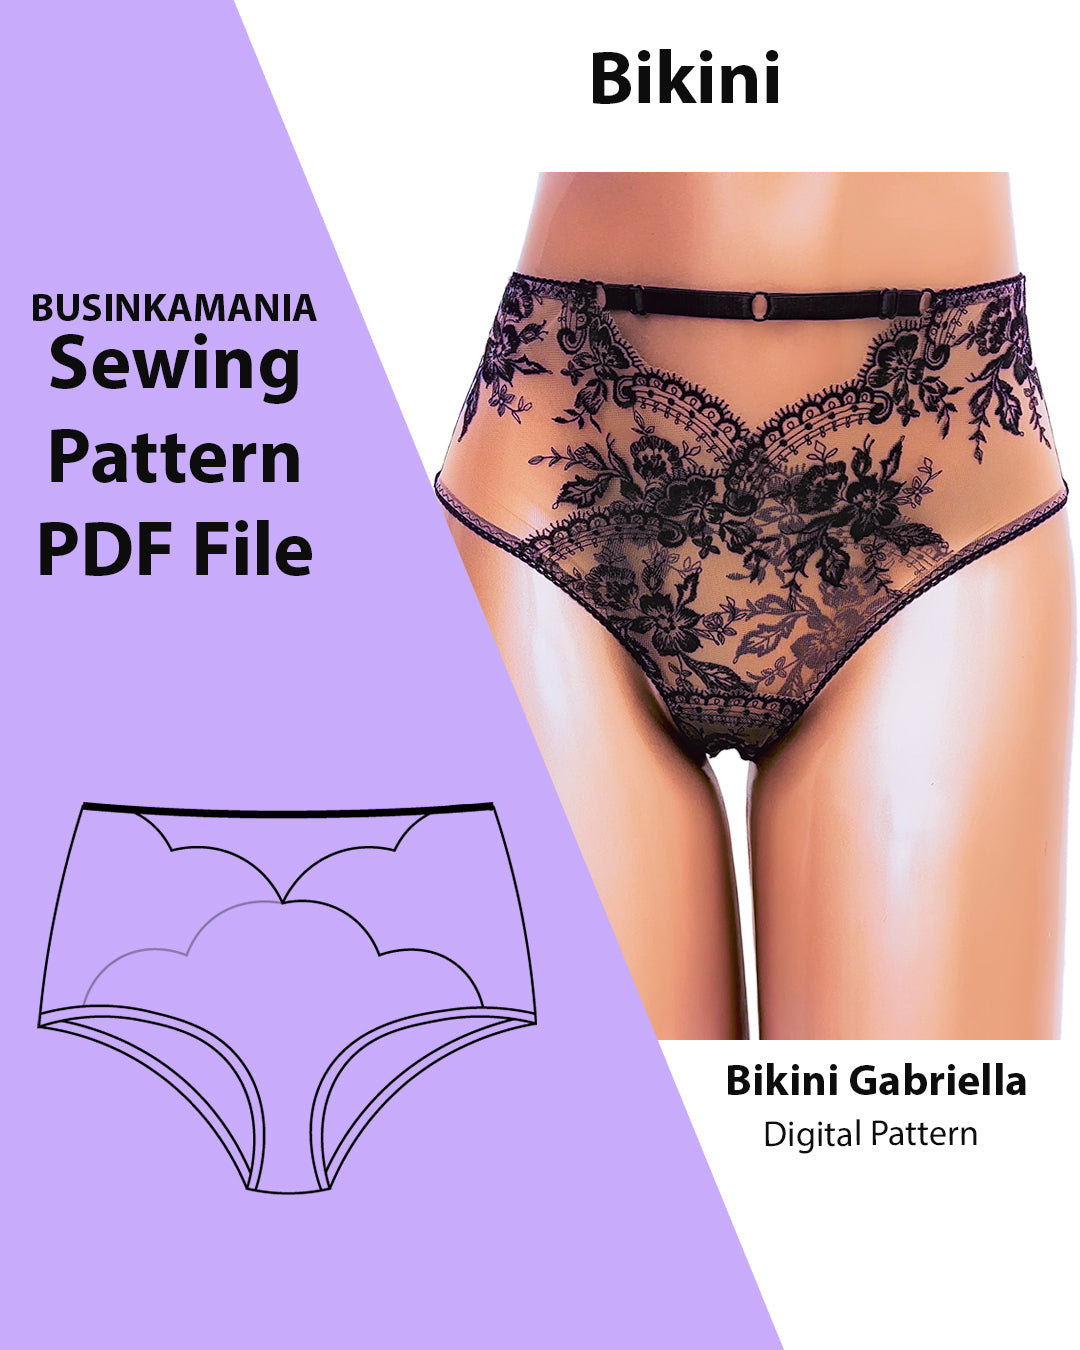 Bikini Gabriella Sewing Pattern